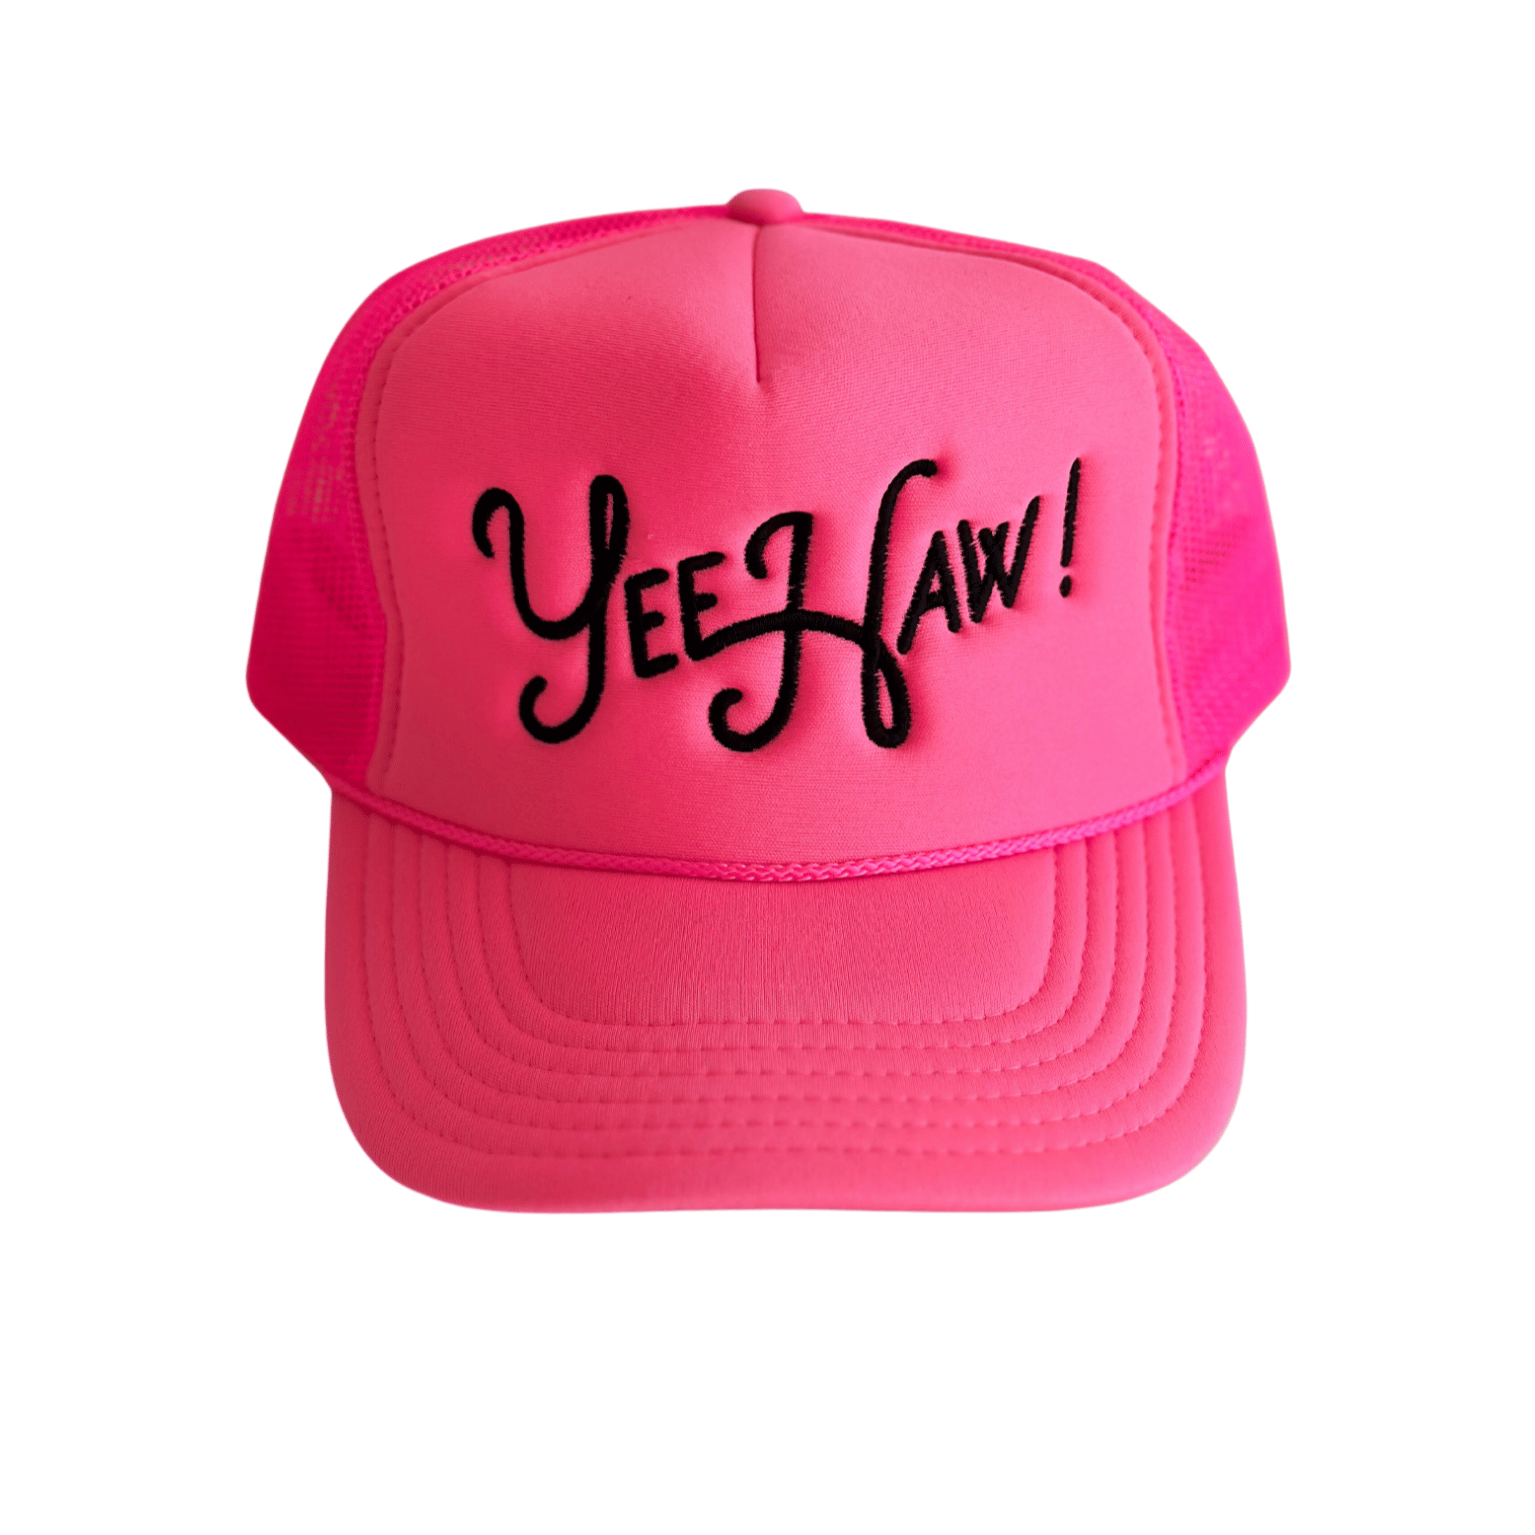 YeeHaw Trucker Hat